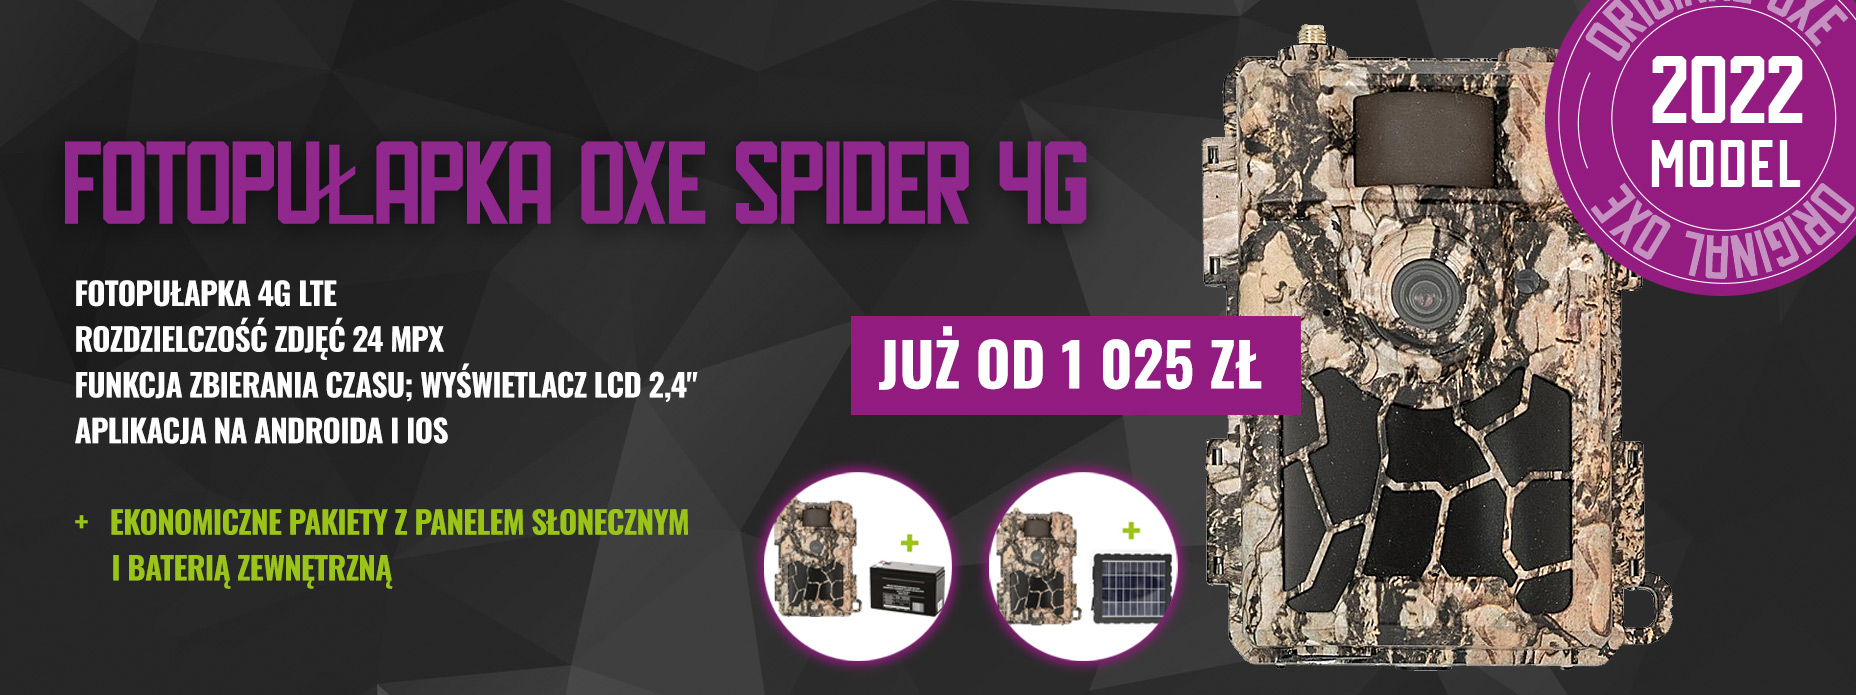 Fotopułapka OXE Spider 4G